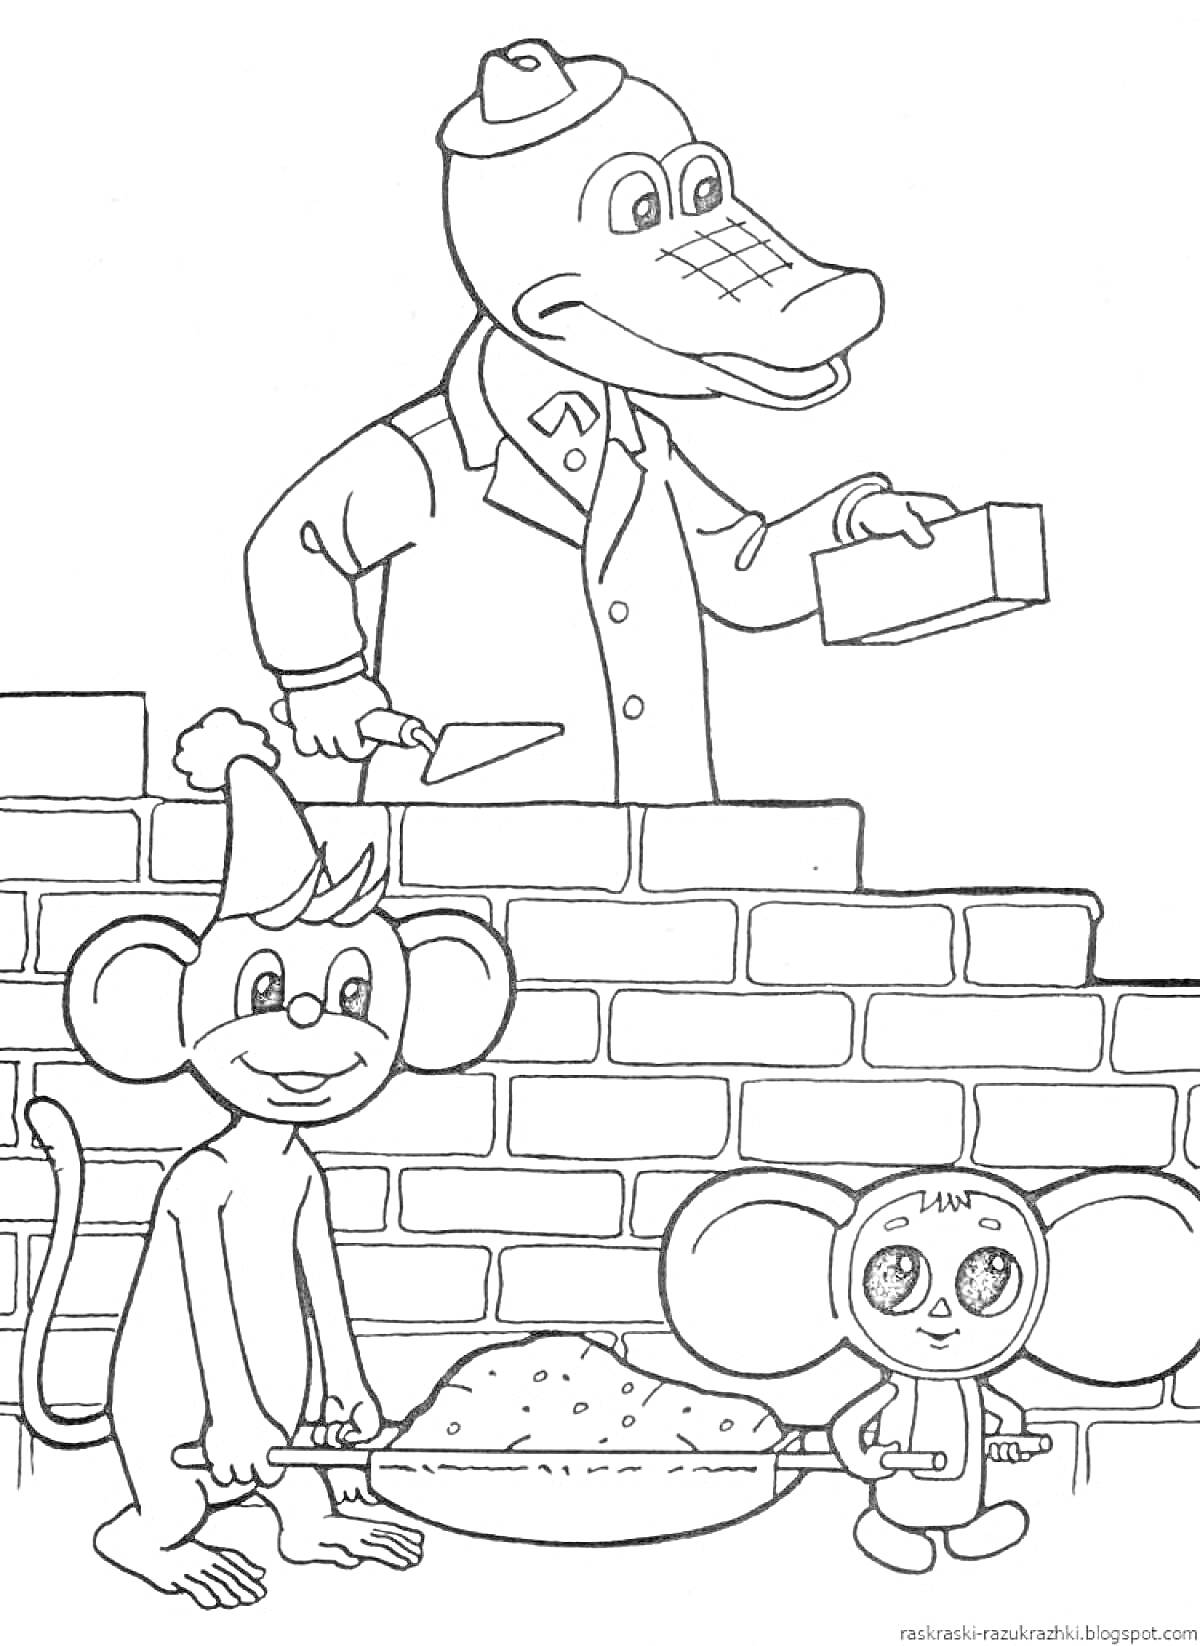 Раскраска Крокодил Гена, Чебурашка и обезьянка строят стену из кирпичей